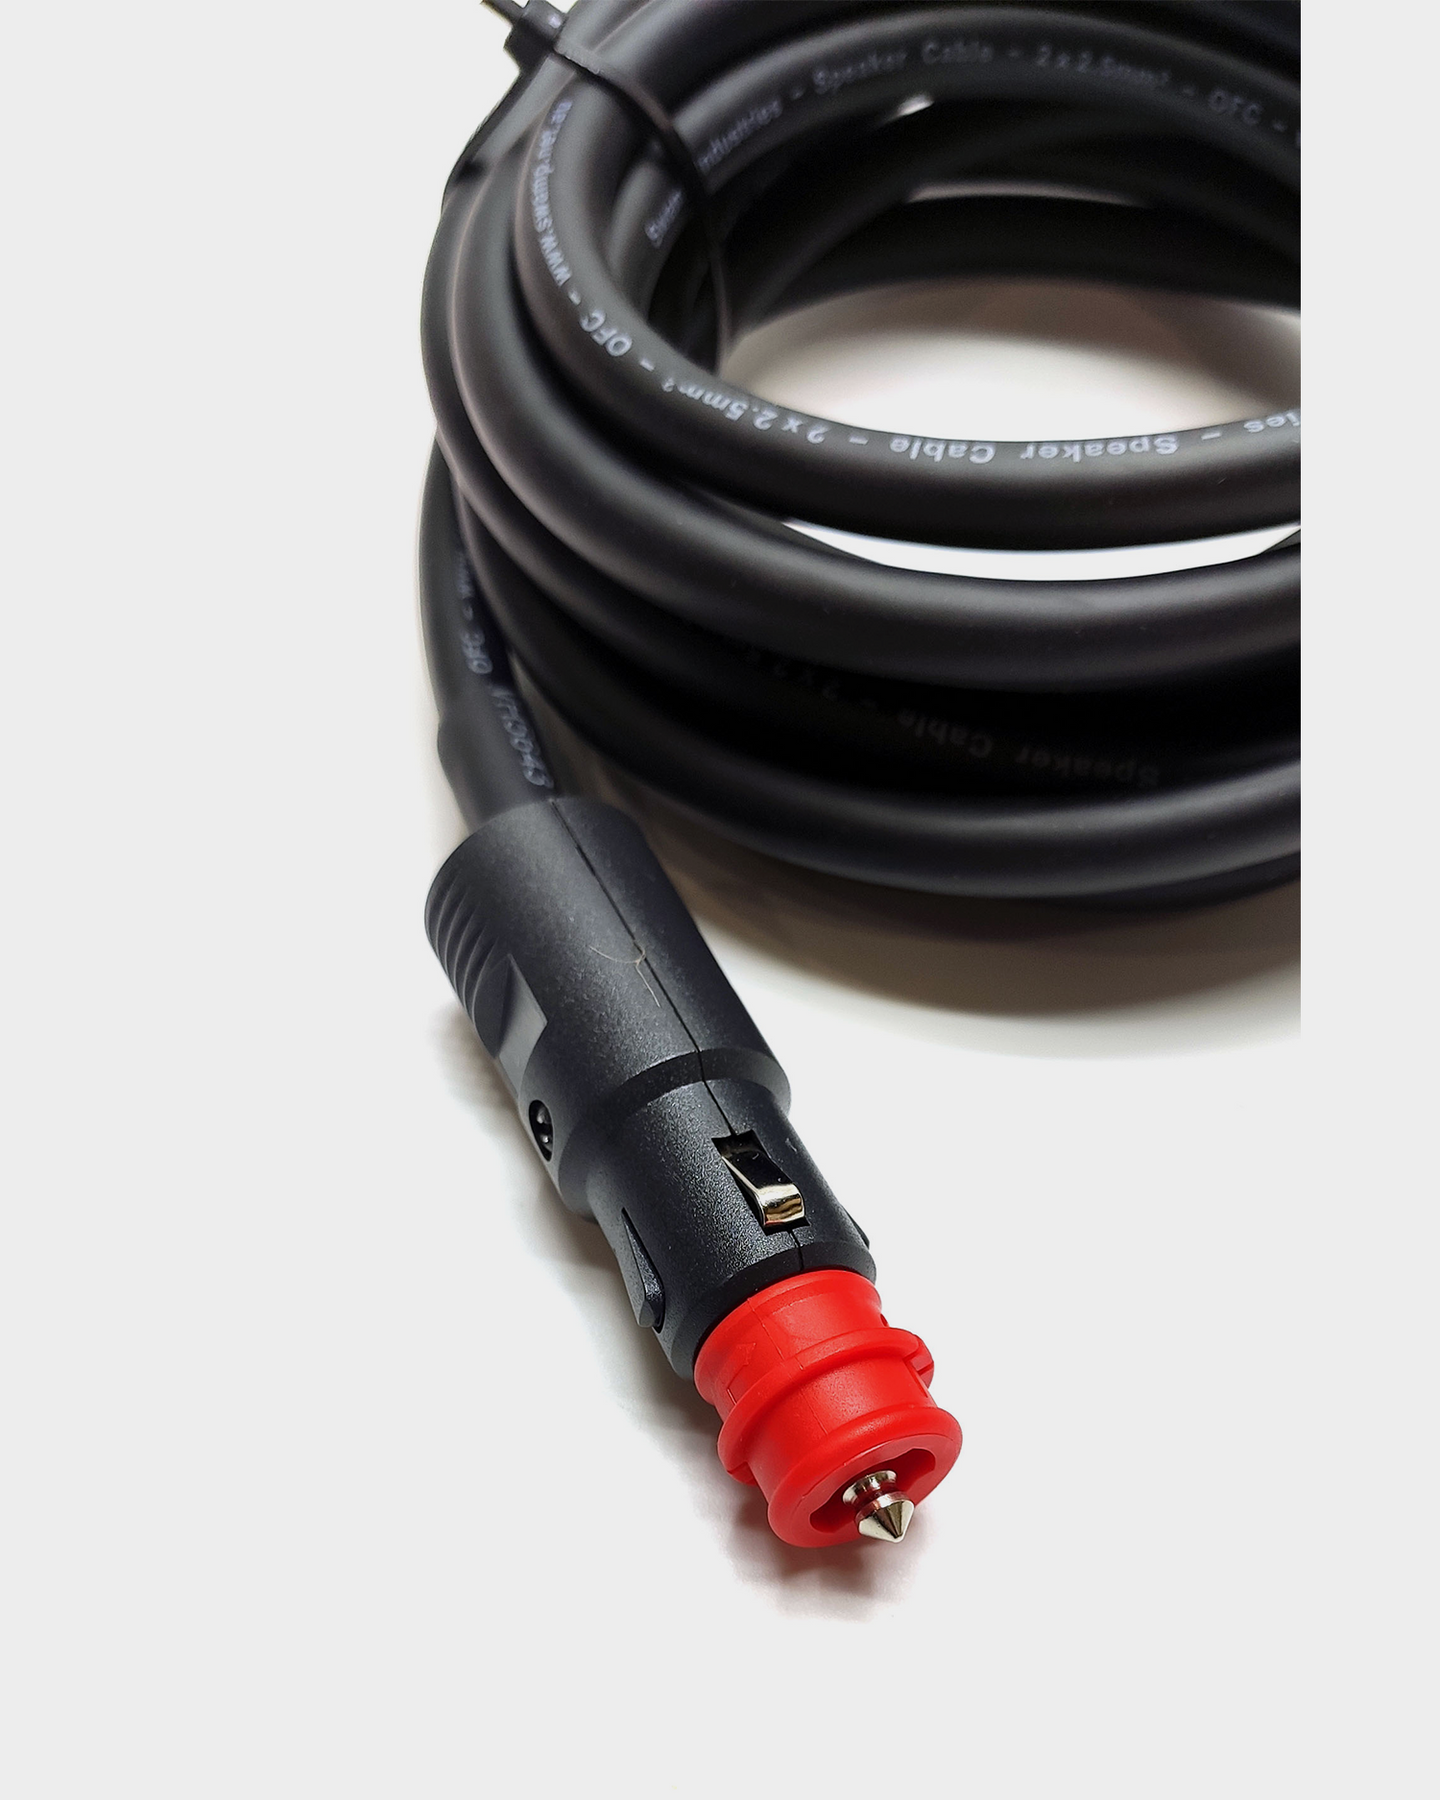 Premium Extension Cable 12v Socket to XT60i (XT60)